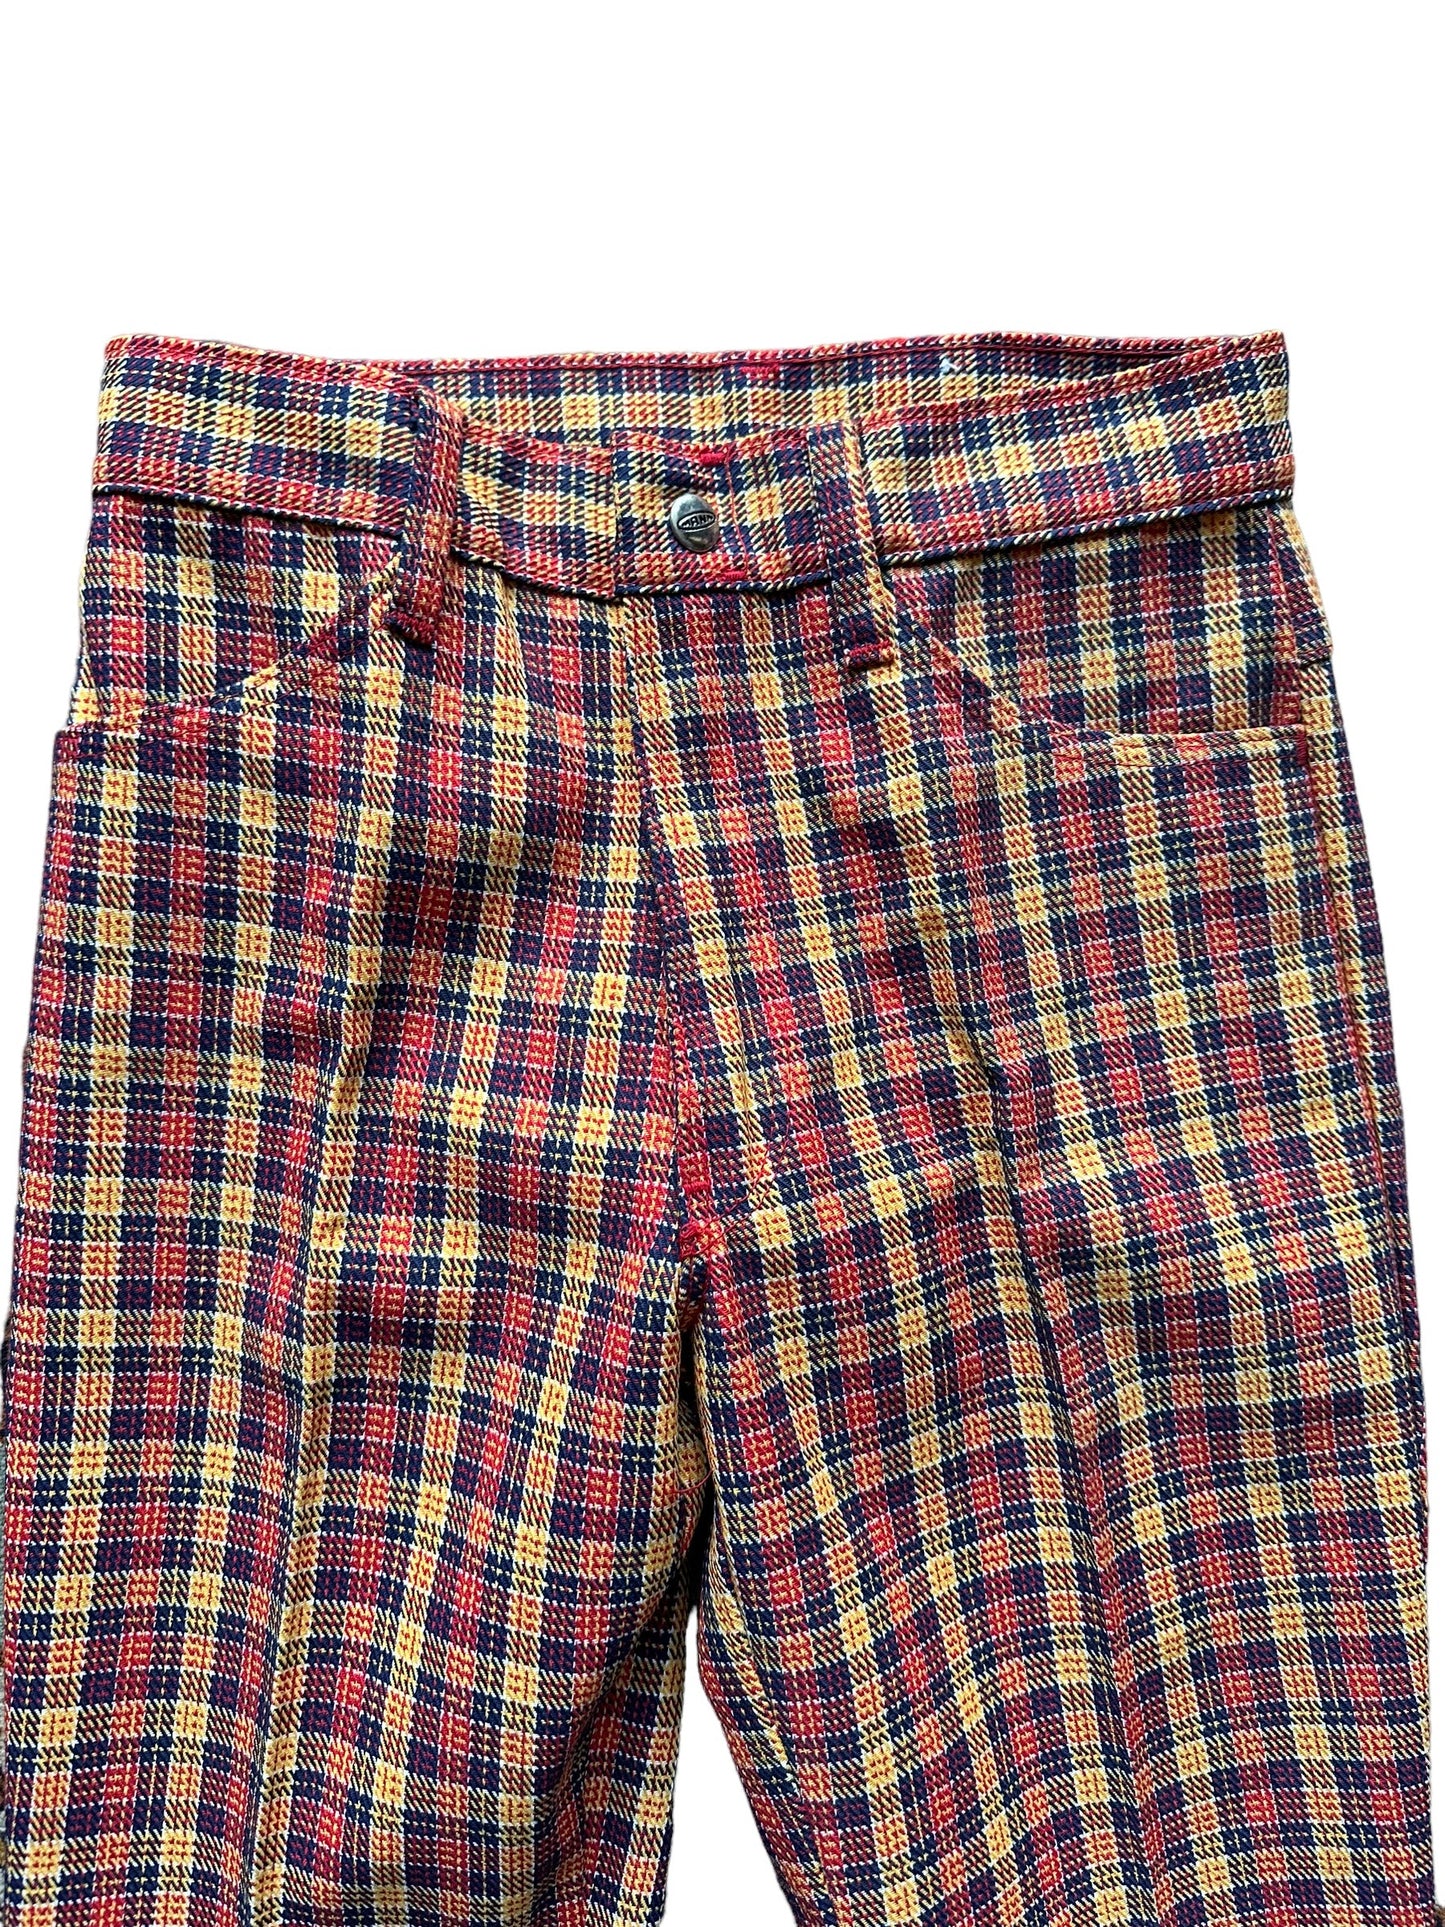 Front waist view of Vintage Deadstock Plaid Mann Pants 26x28 | Vintage Deadstock Trousers | Barn Owl Seattle Vintage